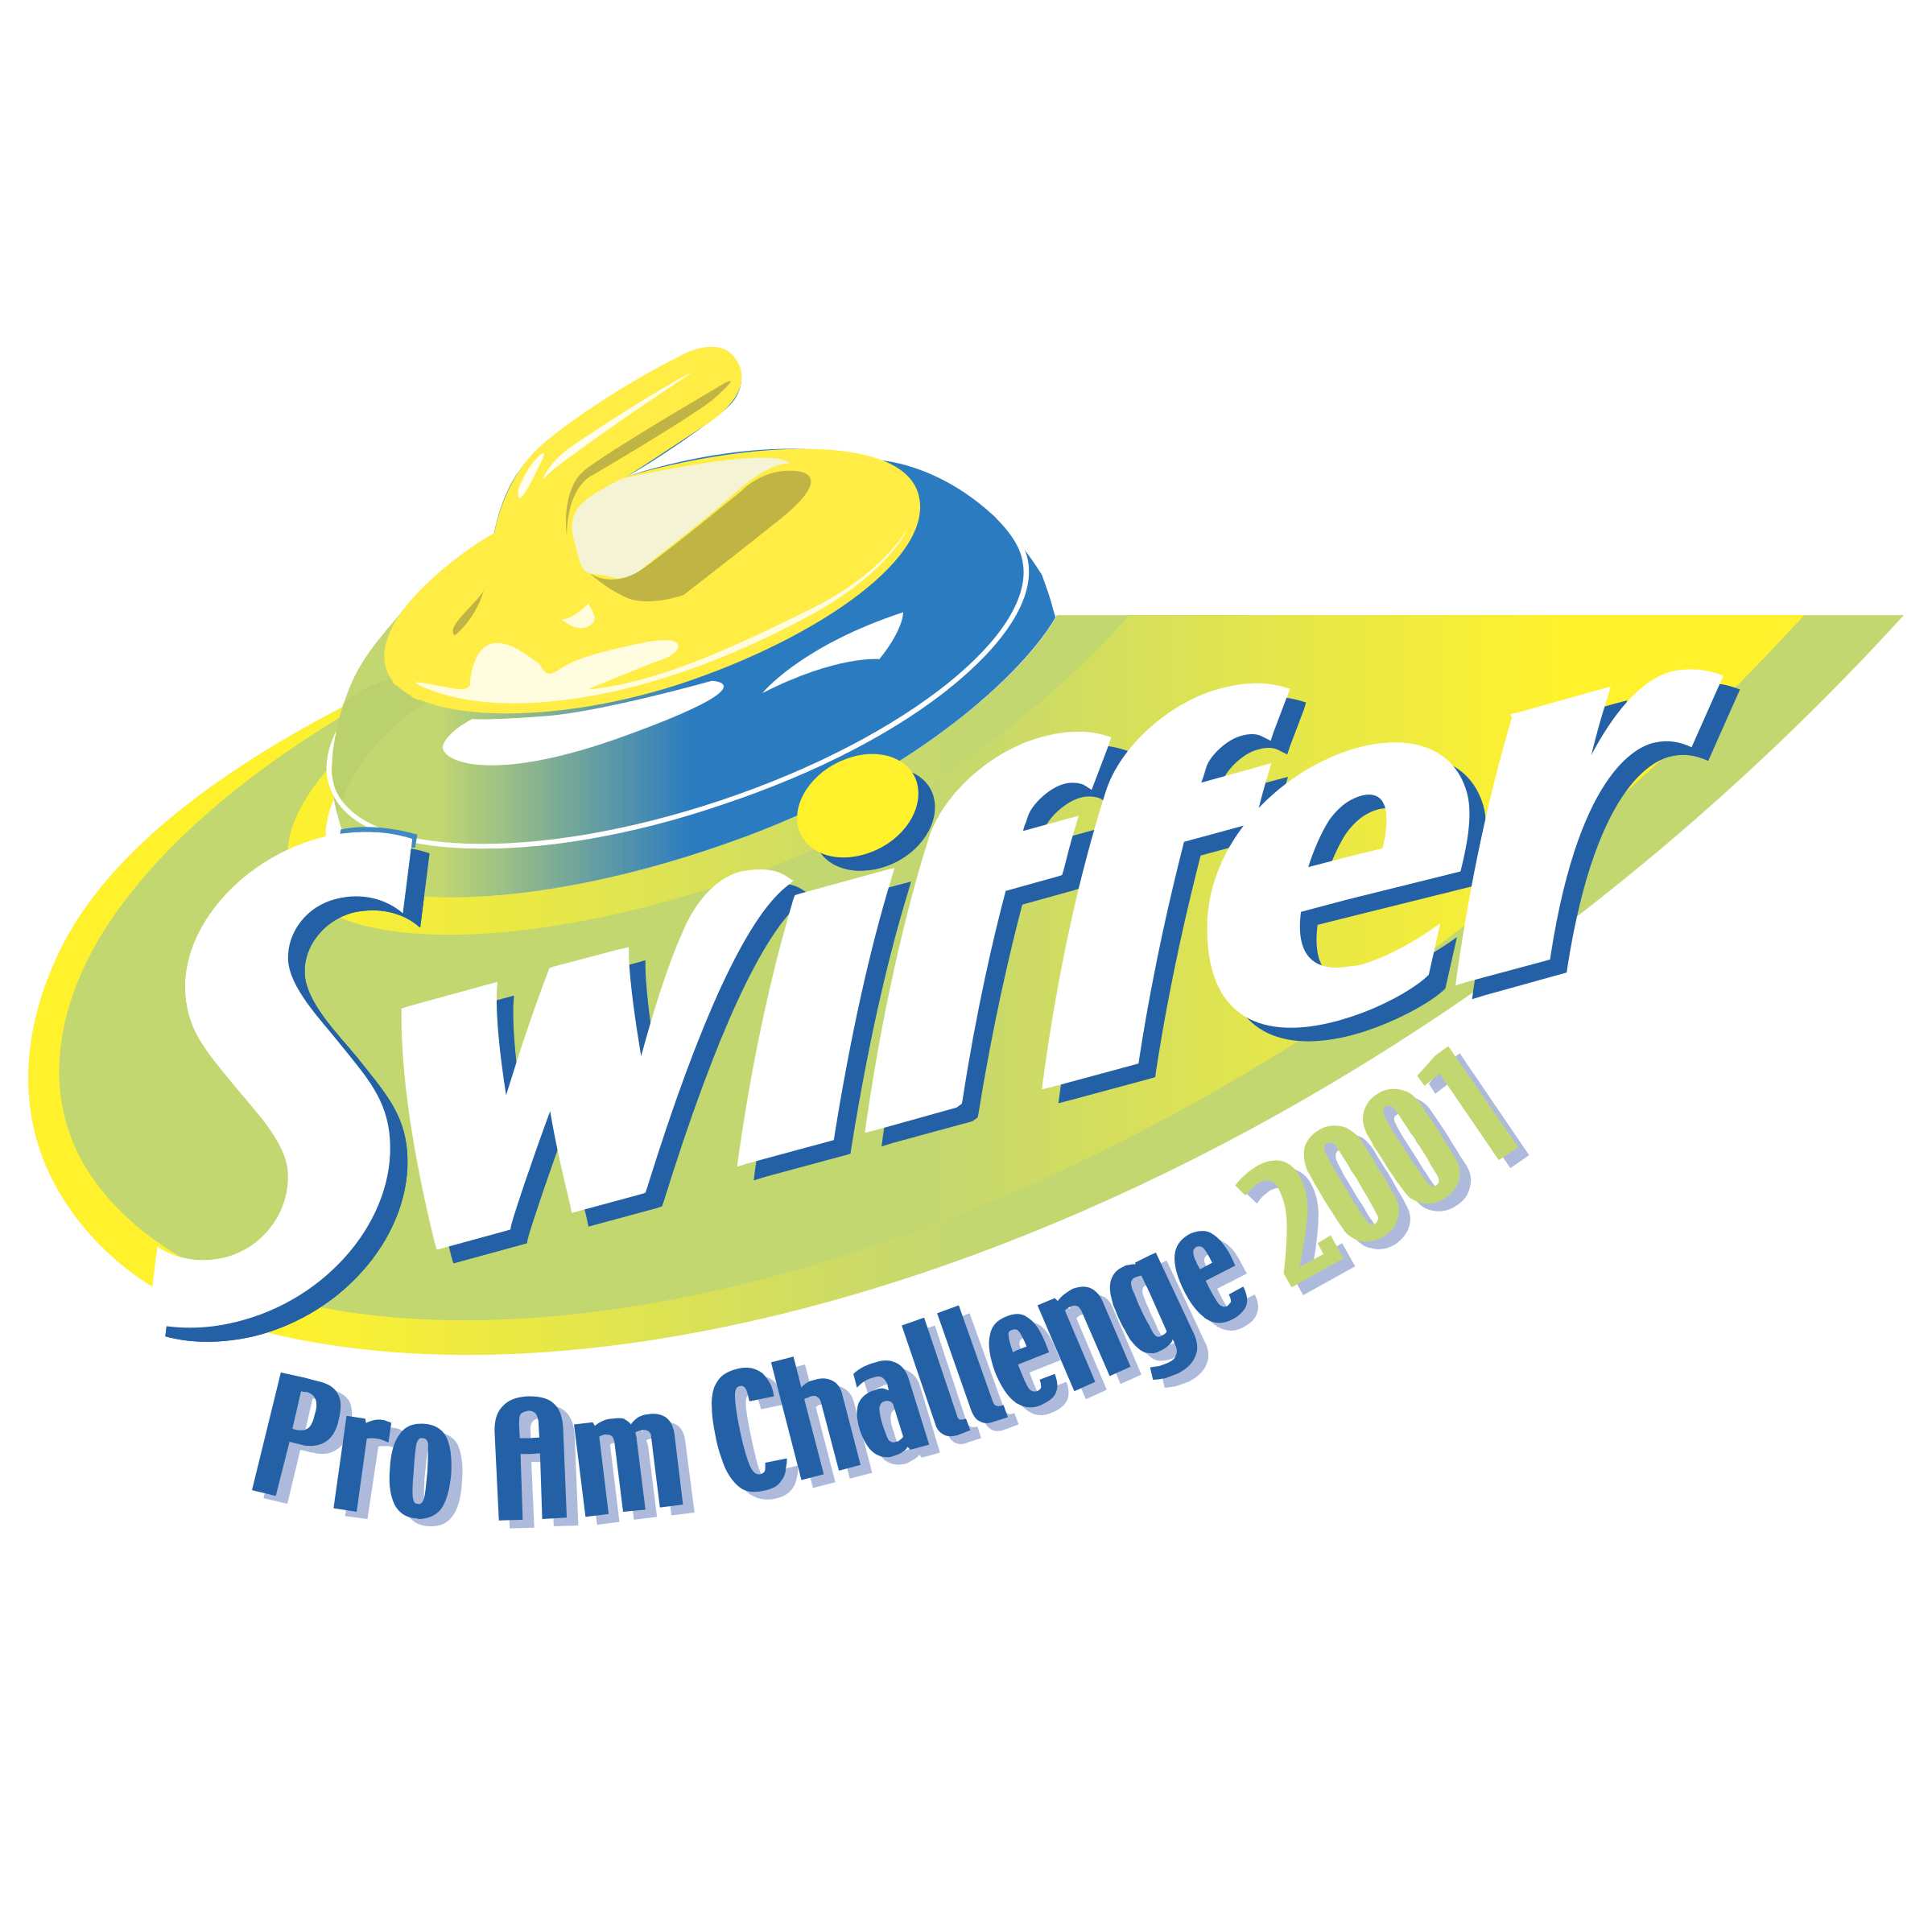 Swiffer Logo - Swiffer Logo PNG Transparent & SVG Vector - Freebie Supply